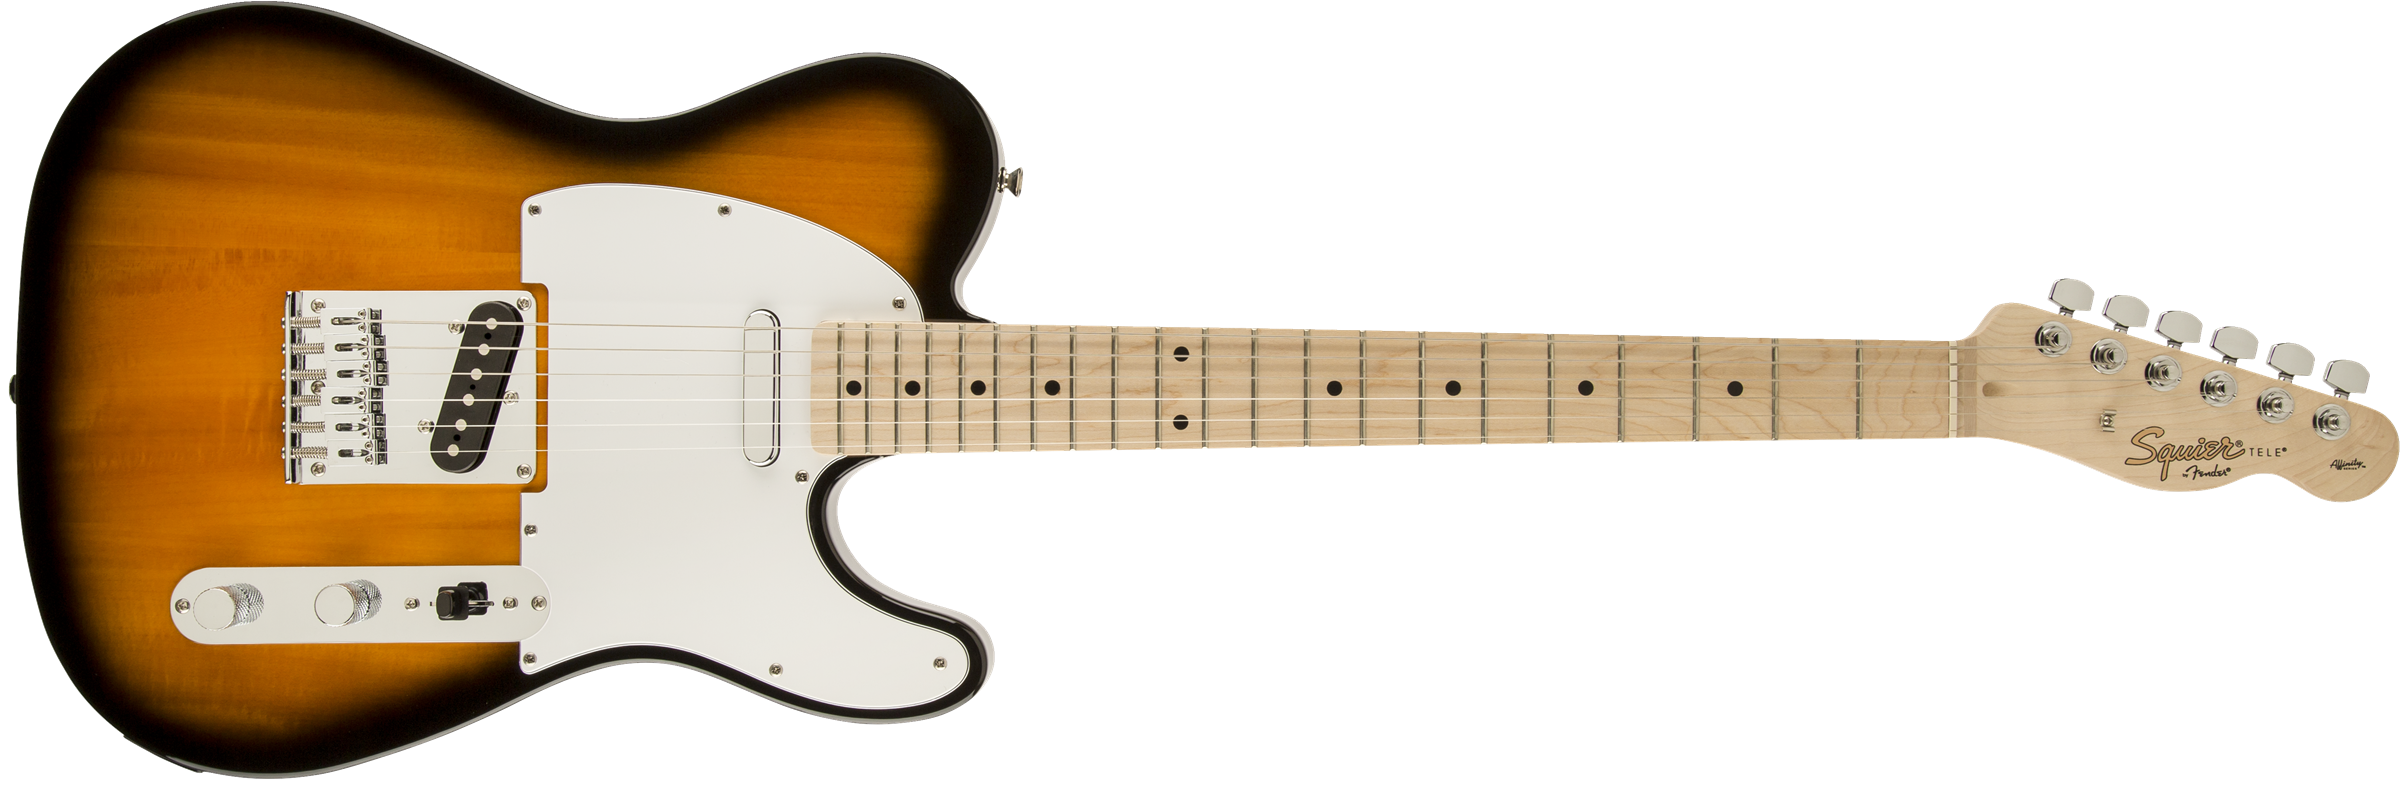 Squier Tele Affinity Series Mn - 2-color Sunburst - Televorm elektrische gitaar - Variation 1